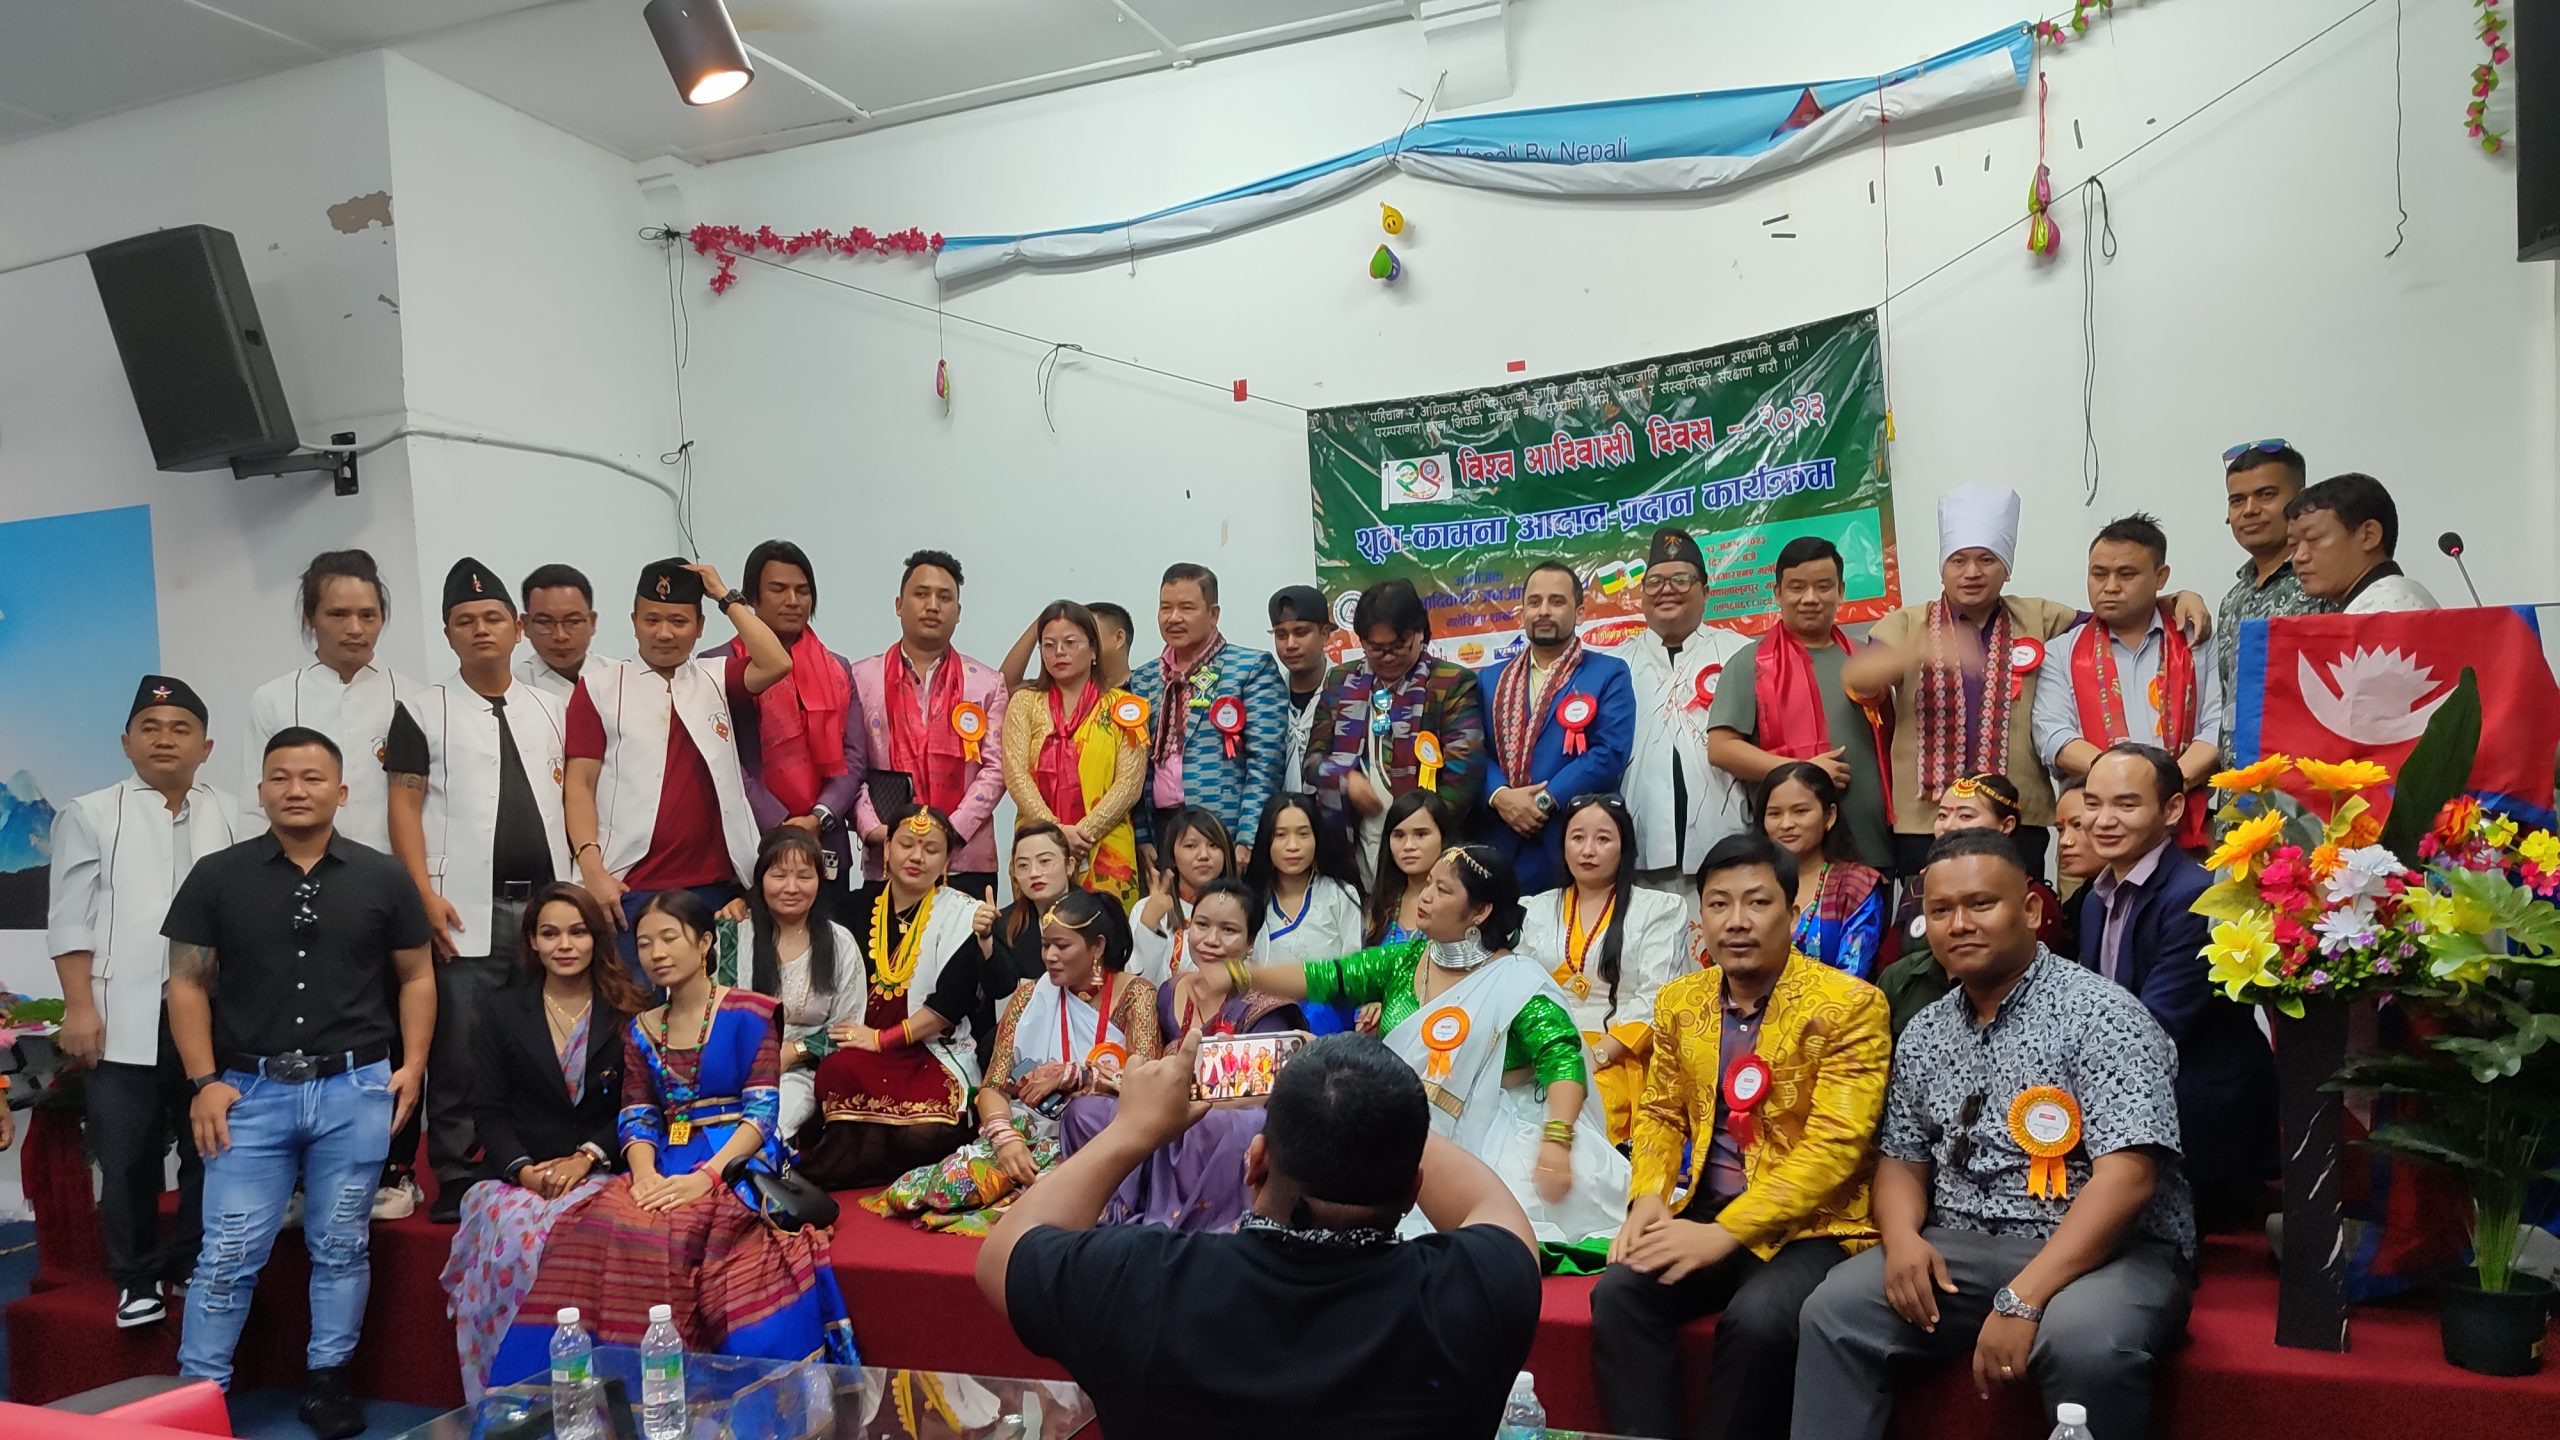 महासंघद्वारा आयोजित २९ औं विश्व आदिवासी दिवसको शुभकामना आदानप्रदान कार्यक्रम सम्पन्न